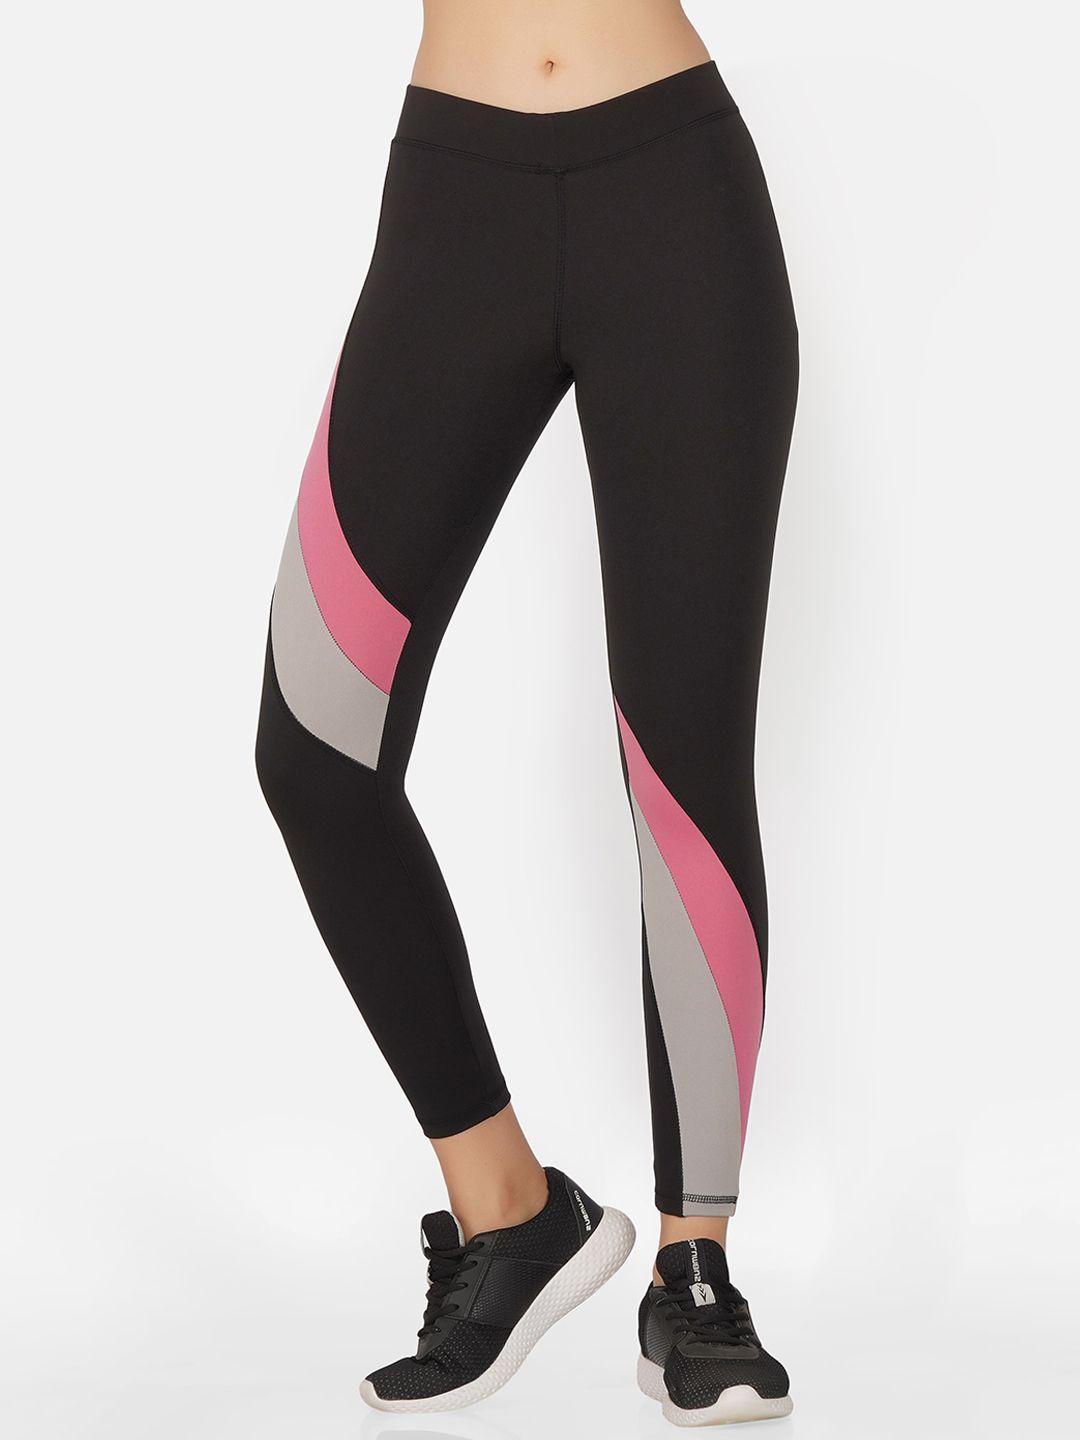 neu look fashion women black & pink colourblocked gym tights